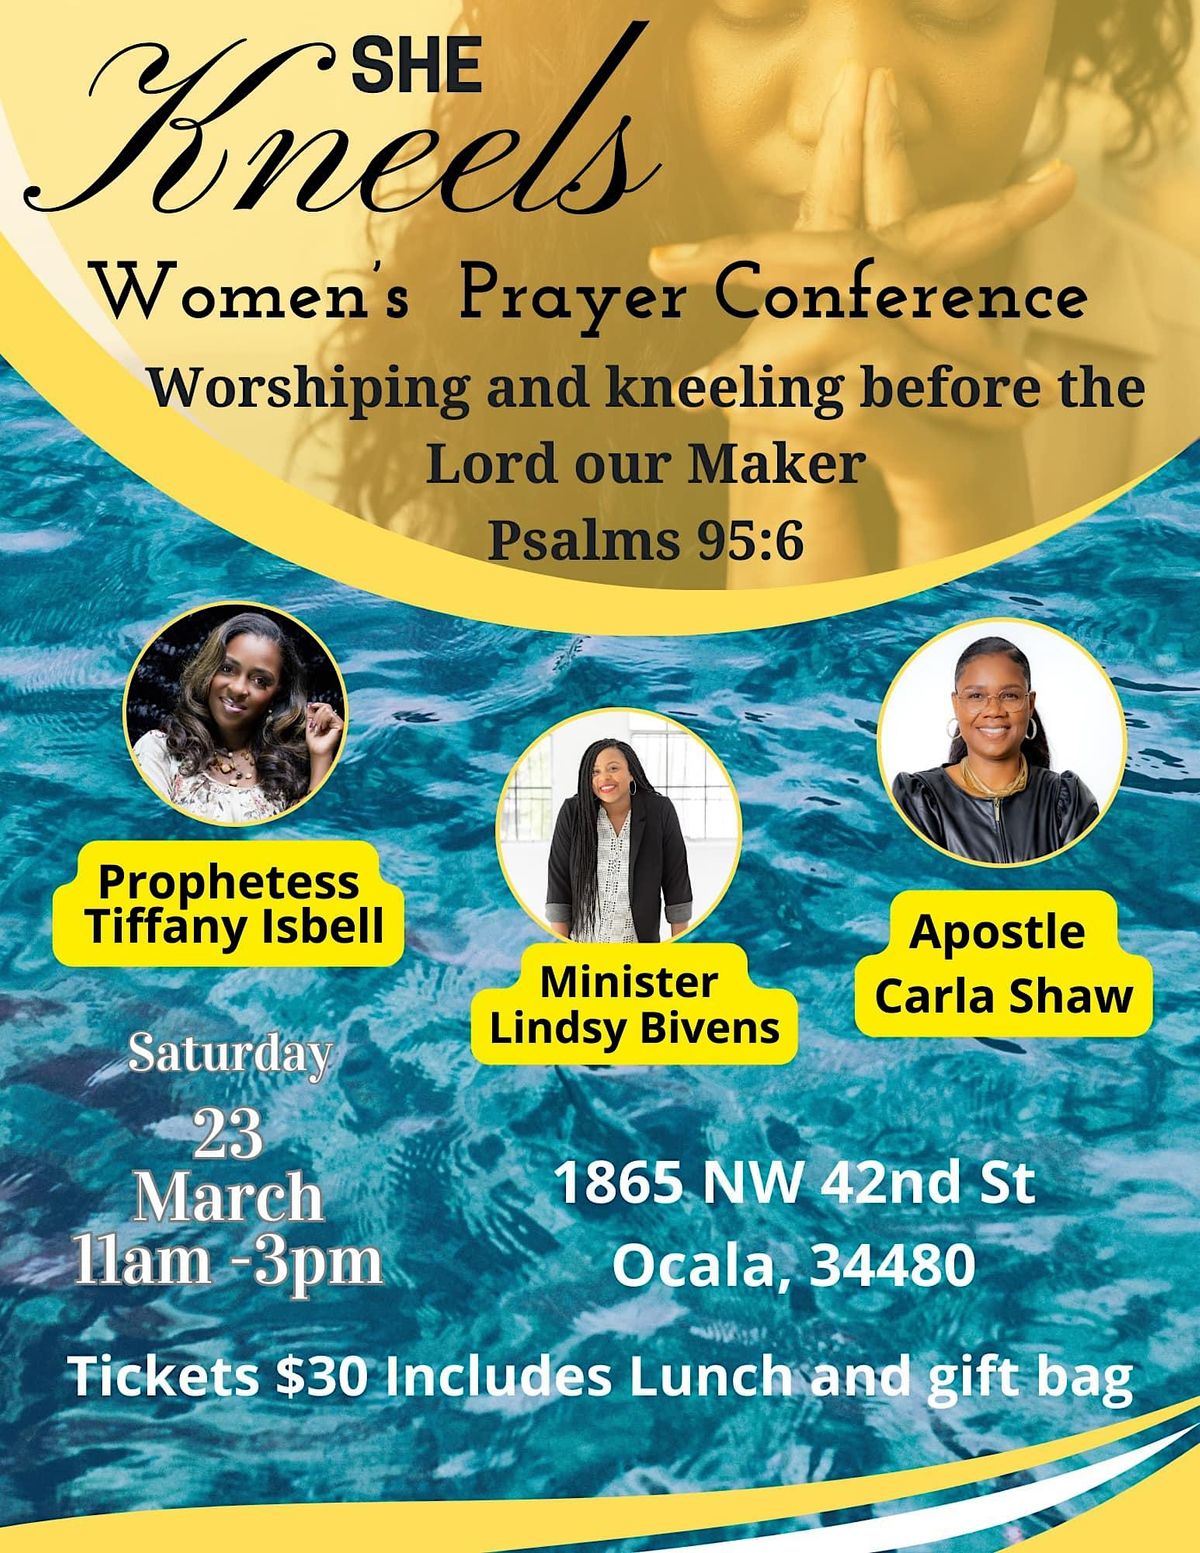 She Kneels Women's Prayer Conference